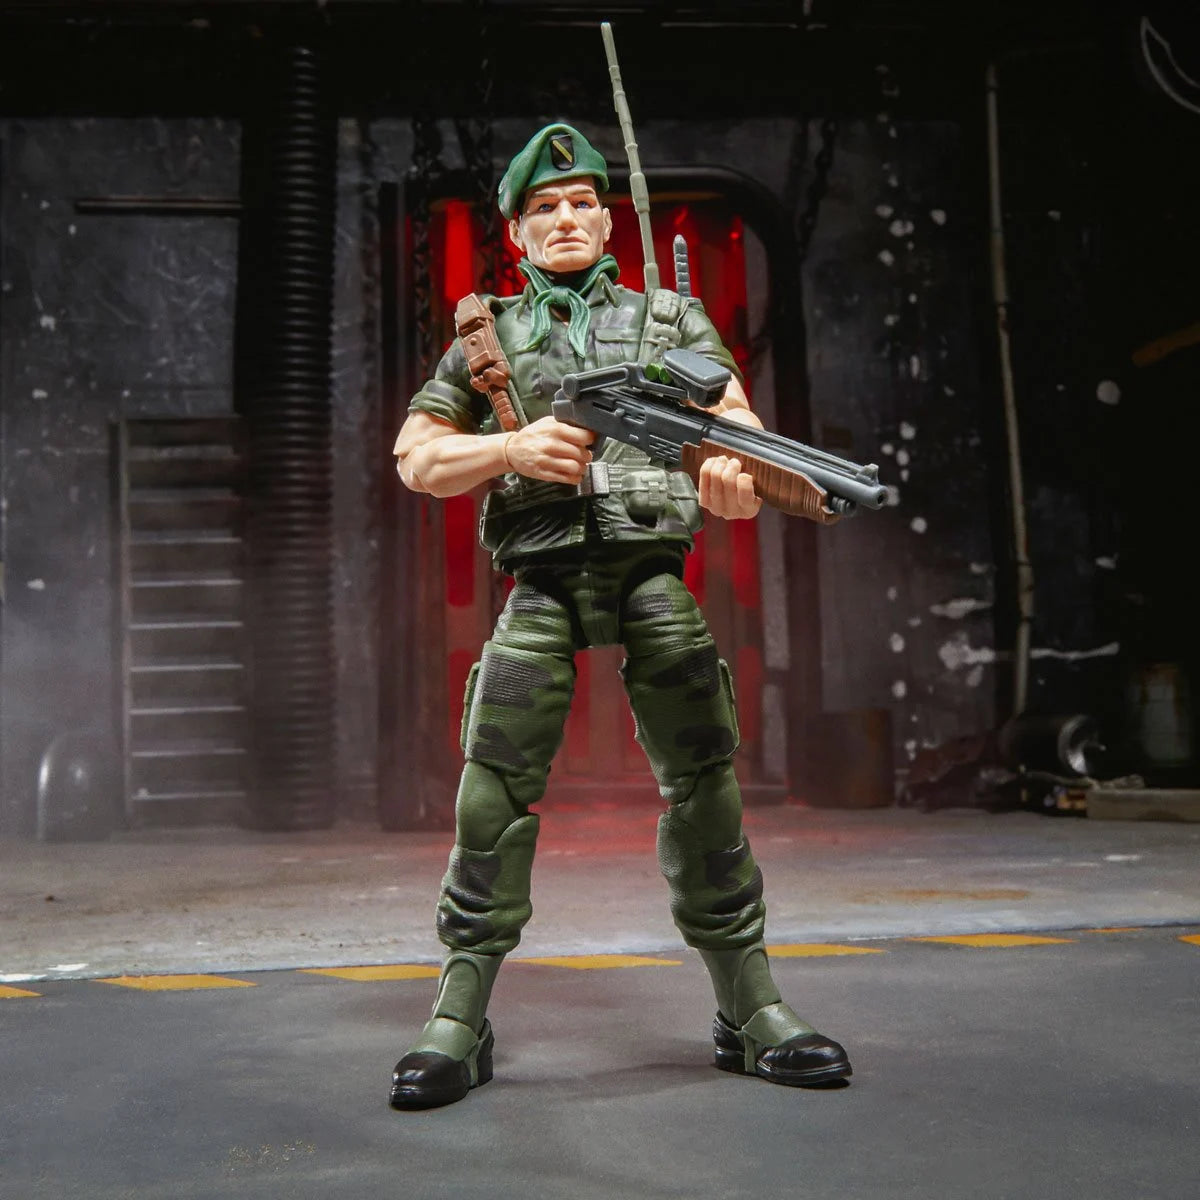 G.I. Joe Classified Series 6-Inch Vincent R. Falcon Falcone Action Figure